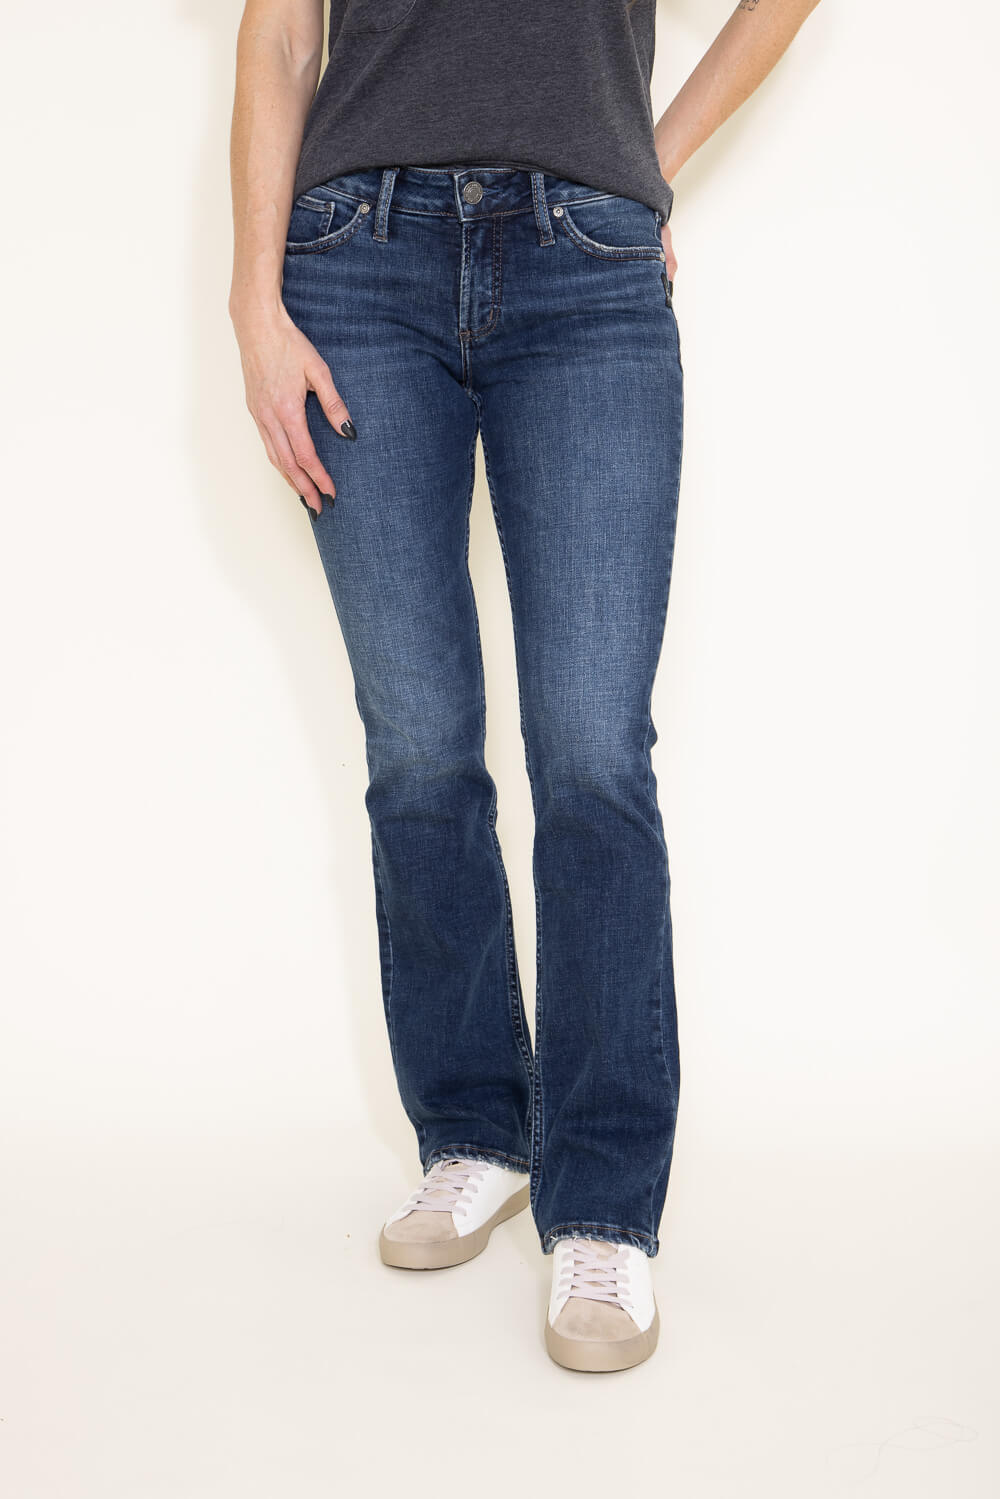 Hollister Co. 5-Pocket Design Boot Cut Jeans for Women